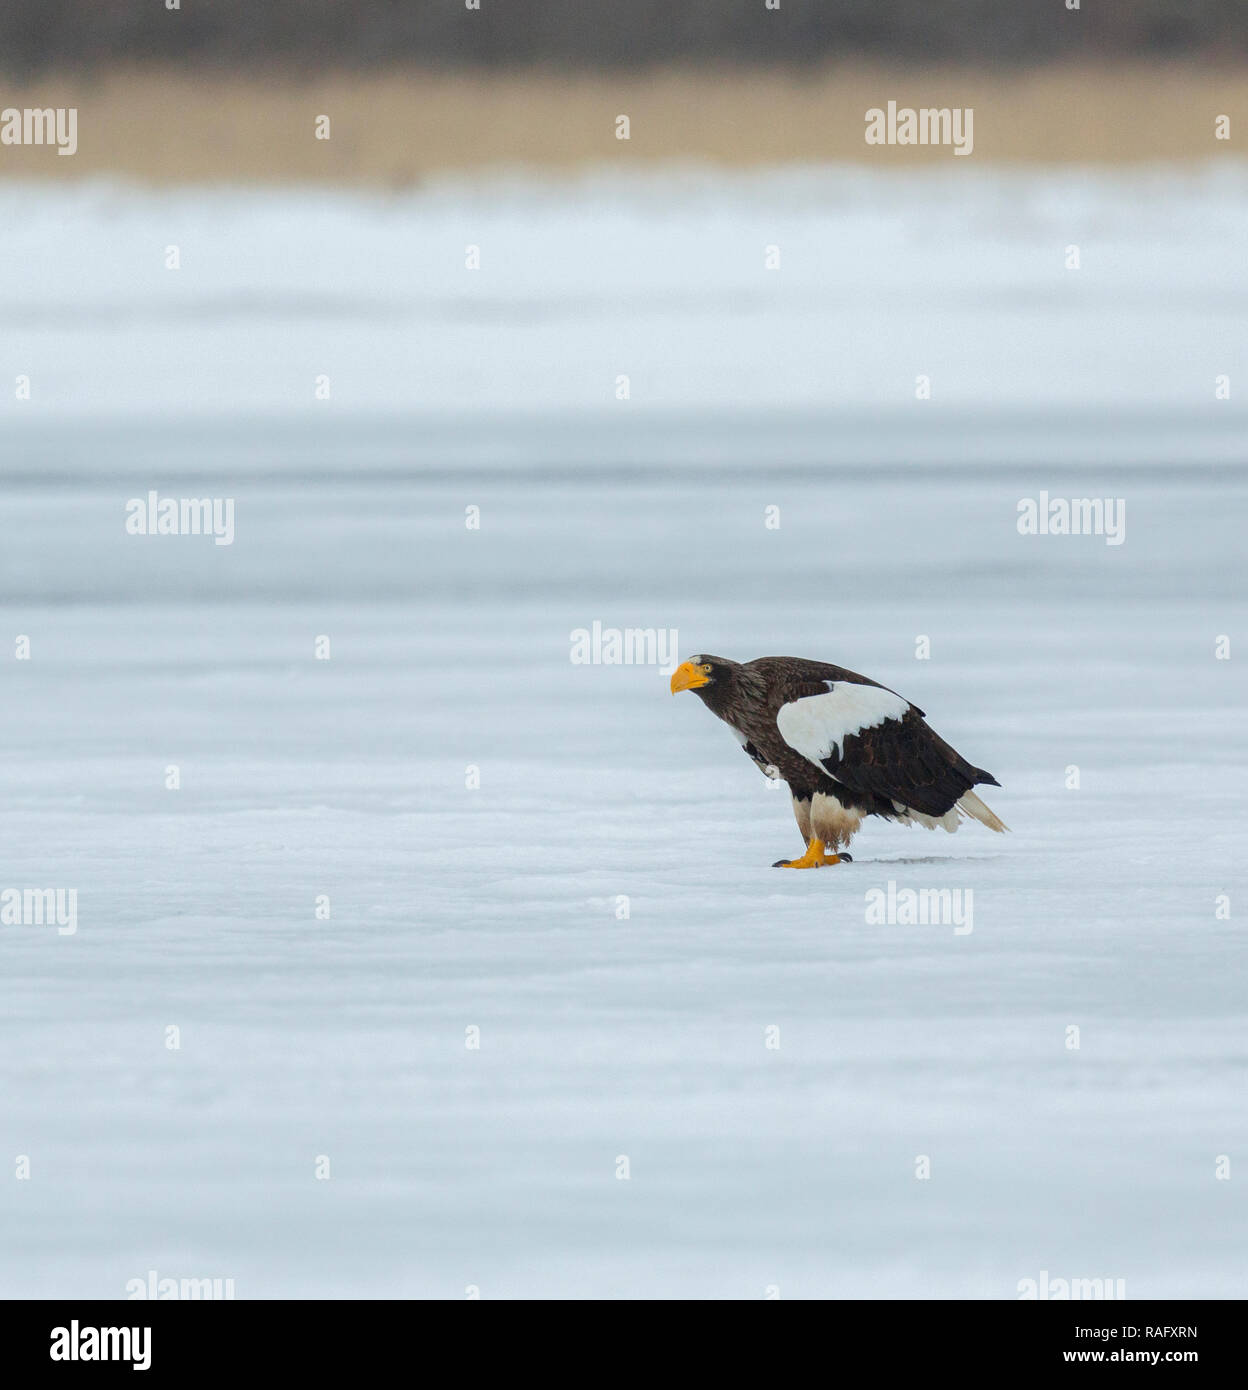 Steller's sea eagle or Haliaeetus pelagicus in Hokkaido Japan during winter migration Stock Photo